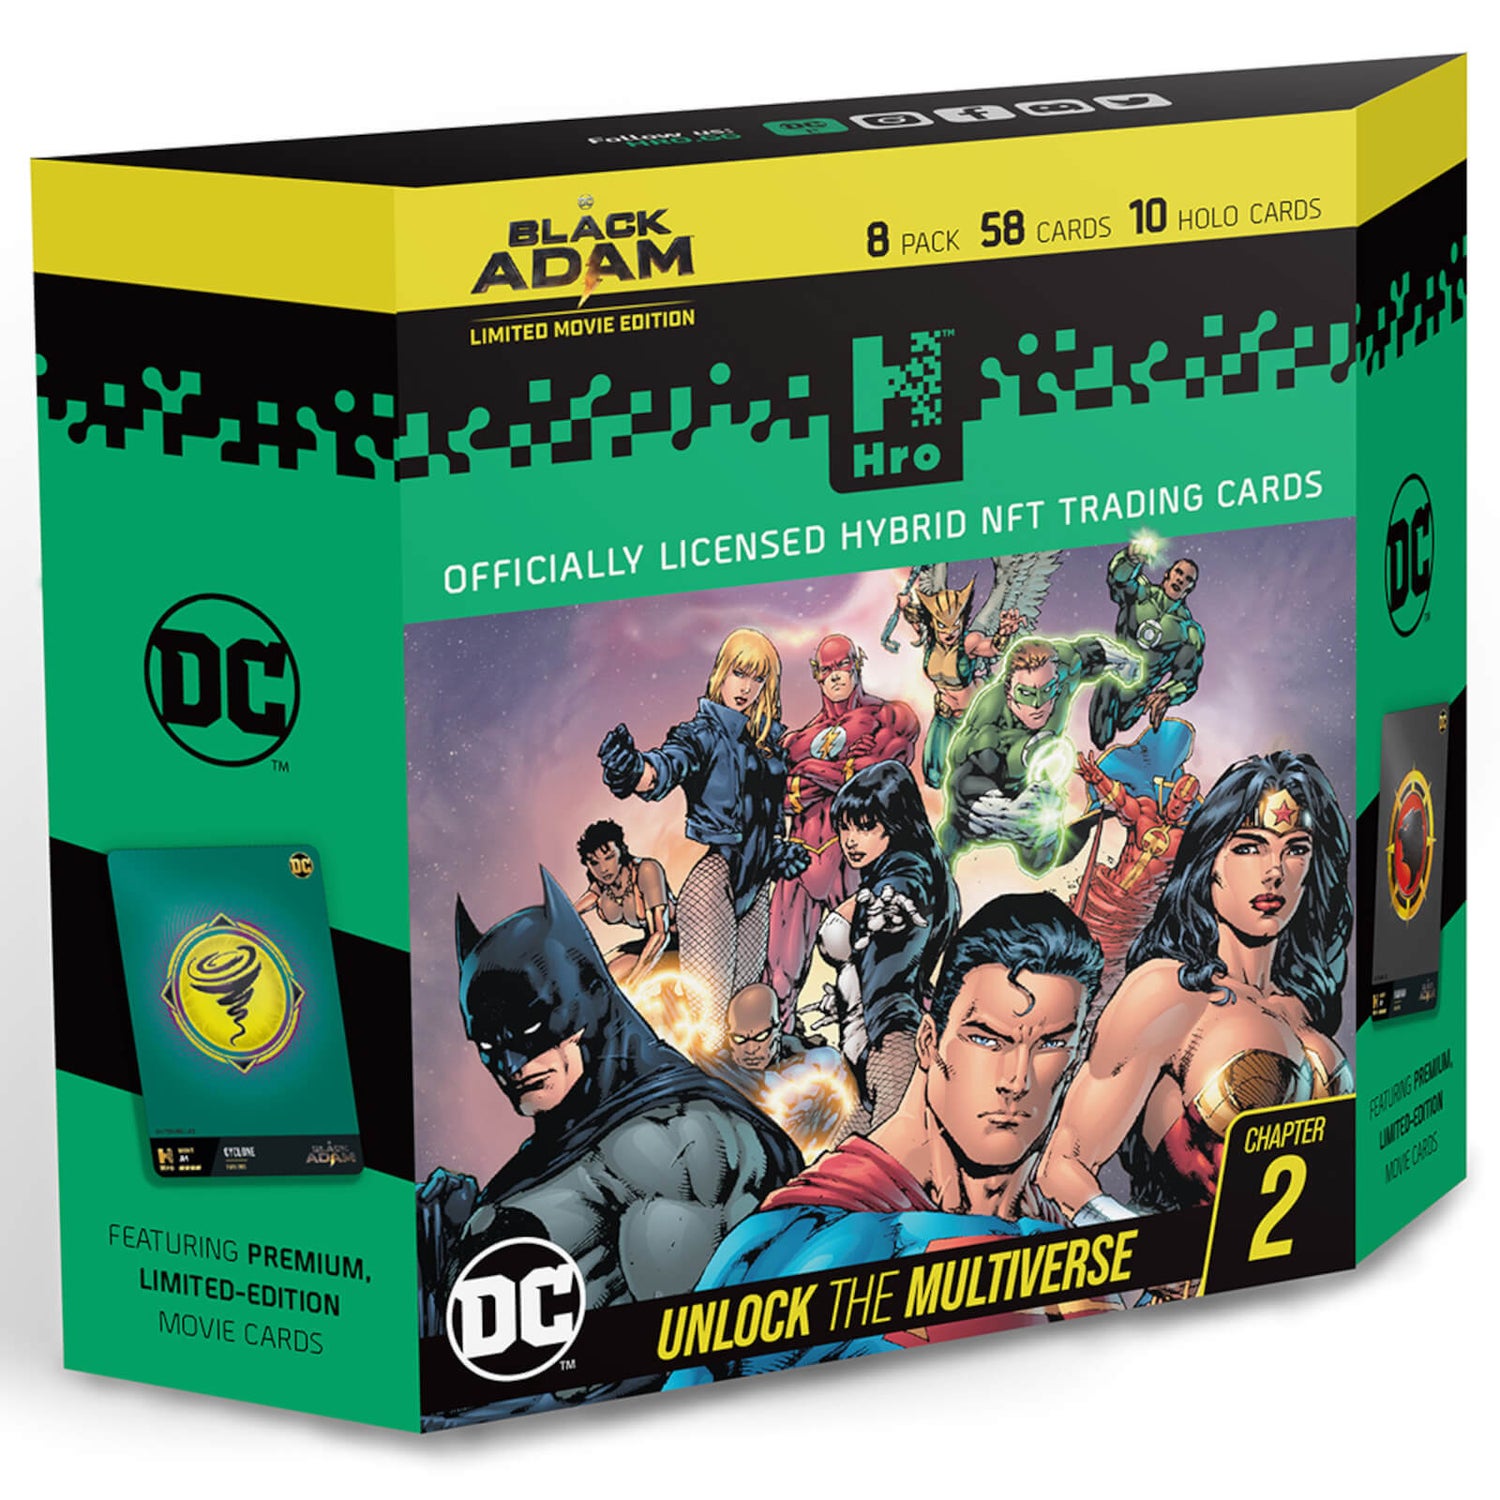 DC Unlock The Multiverse Black Adam 8-Pack Starter Pack – Hro Hybrid NFT Trading Cards, 58 Cards Starter Pack